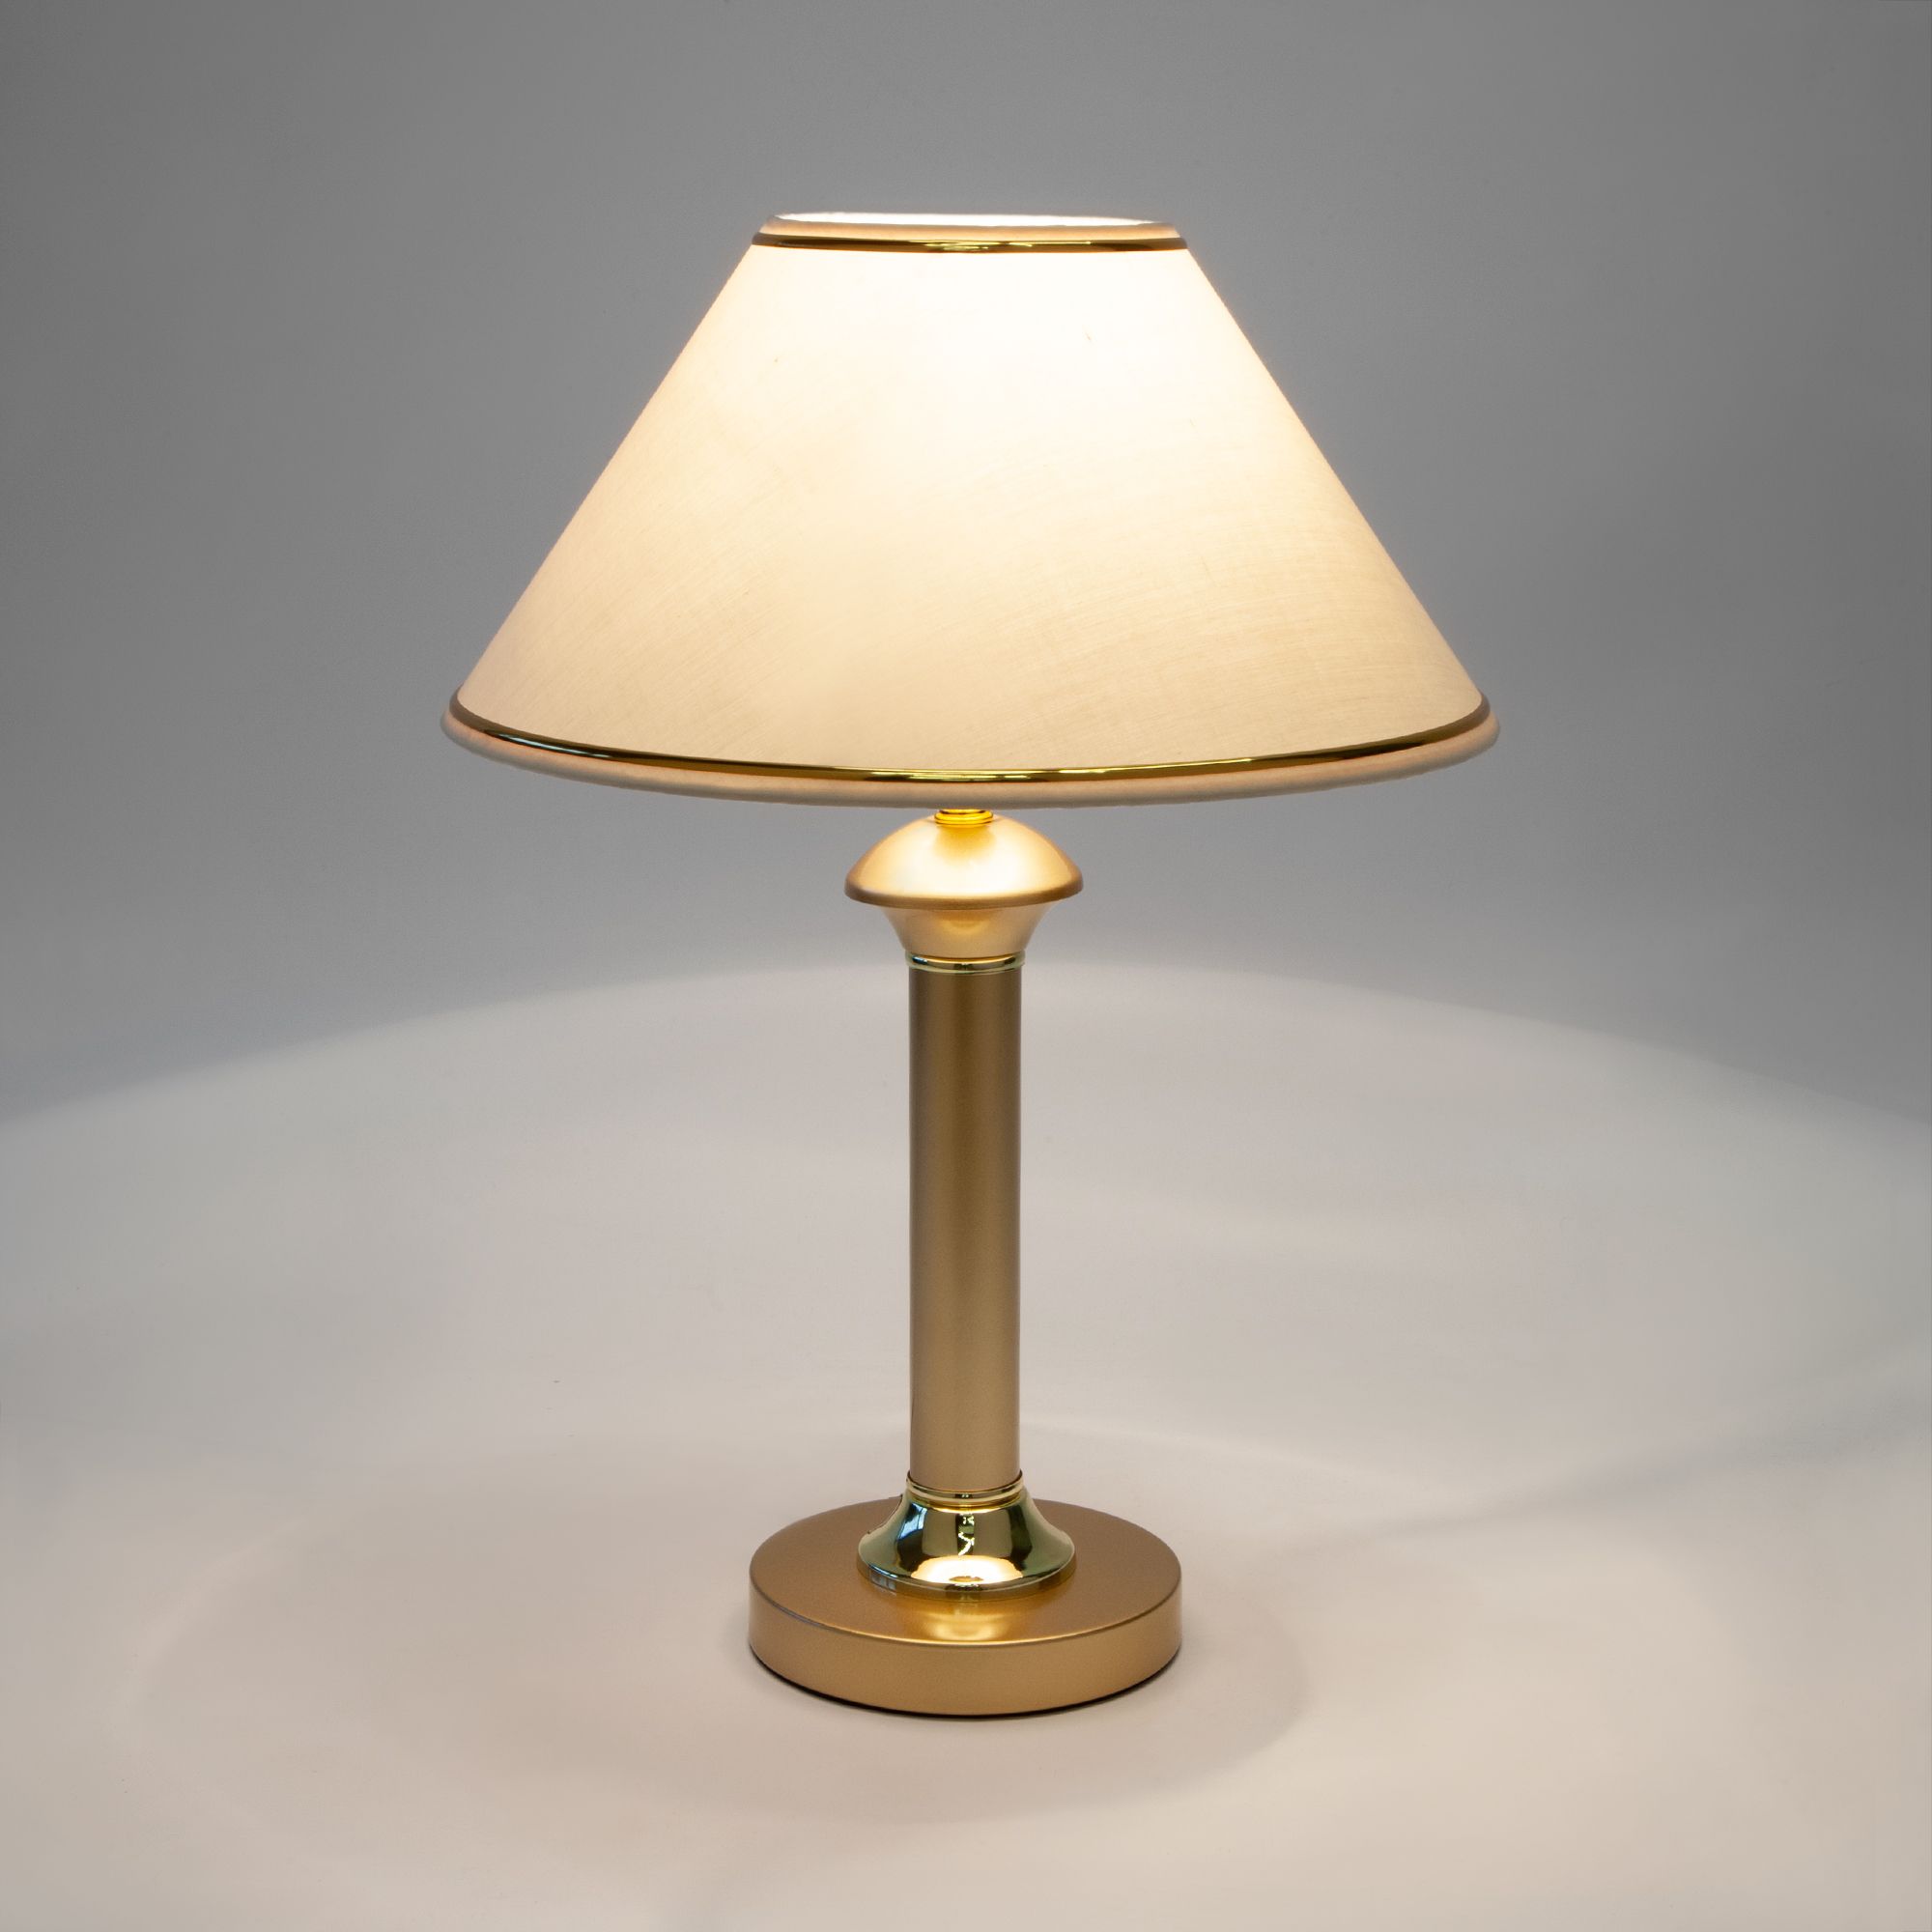 Настольная лампа с абажуром Eurosvet Lorenzo a050630 60019/1 перламутровое золото фото